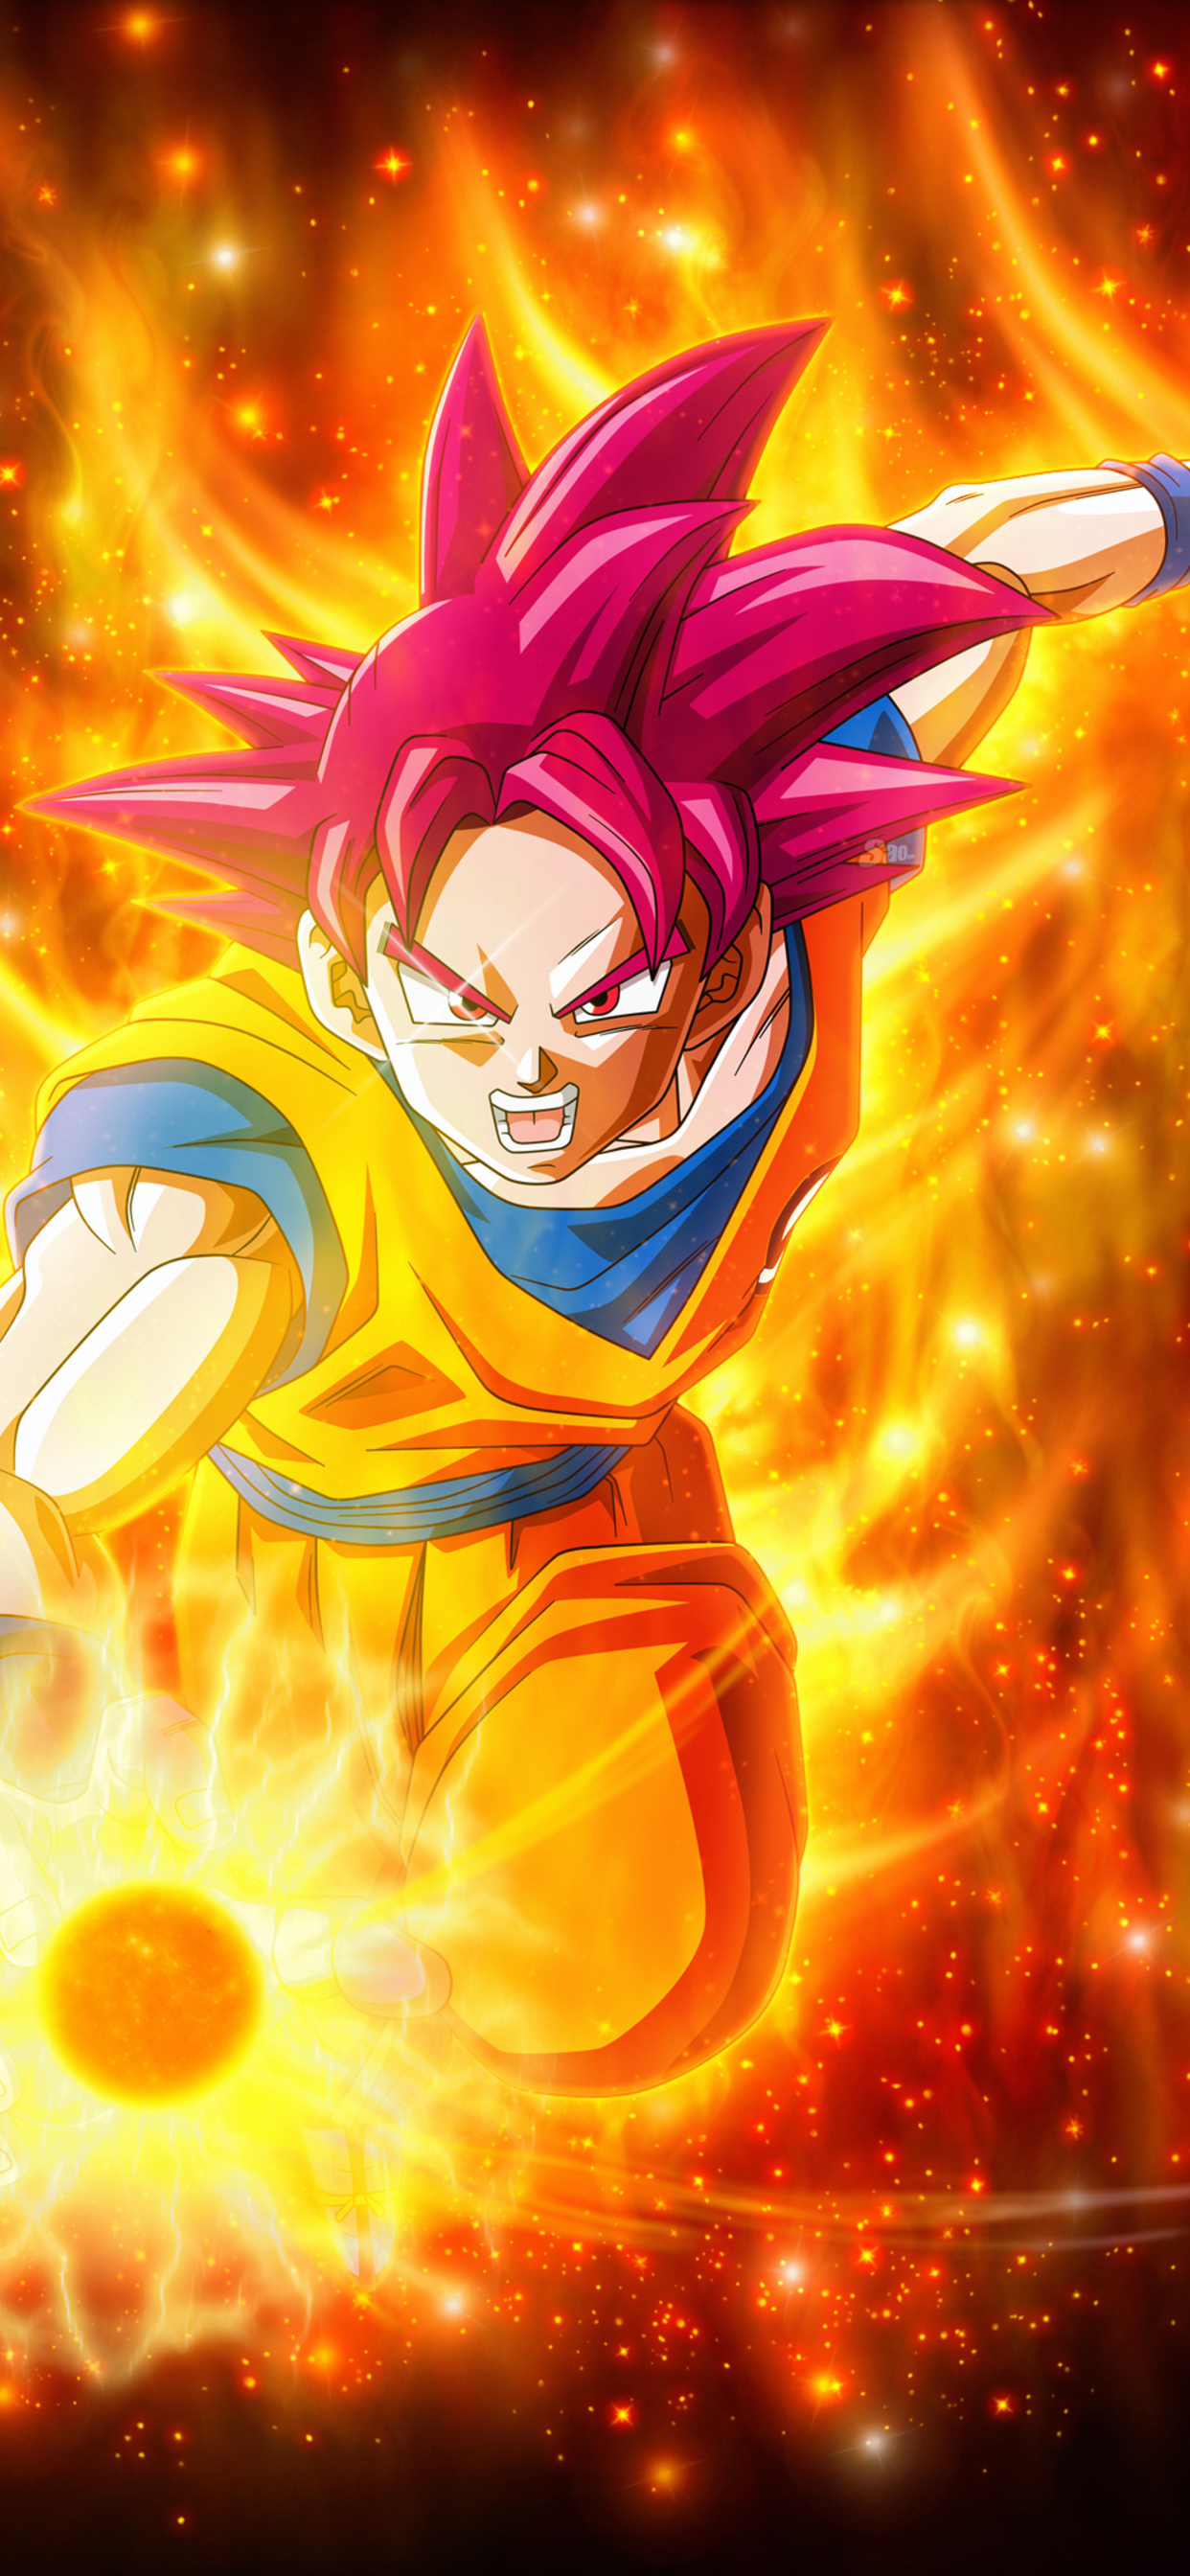 Dragon Ball Super Super Saiyan Goku iPhone XS MAX HD 4k Wallpaper, Image, Background, Photo and Picture